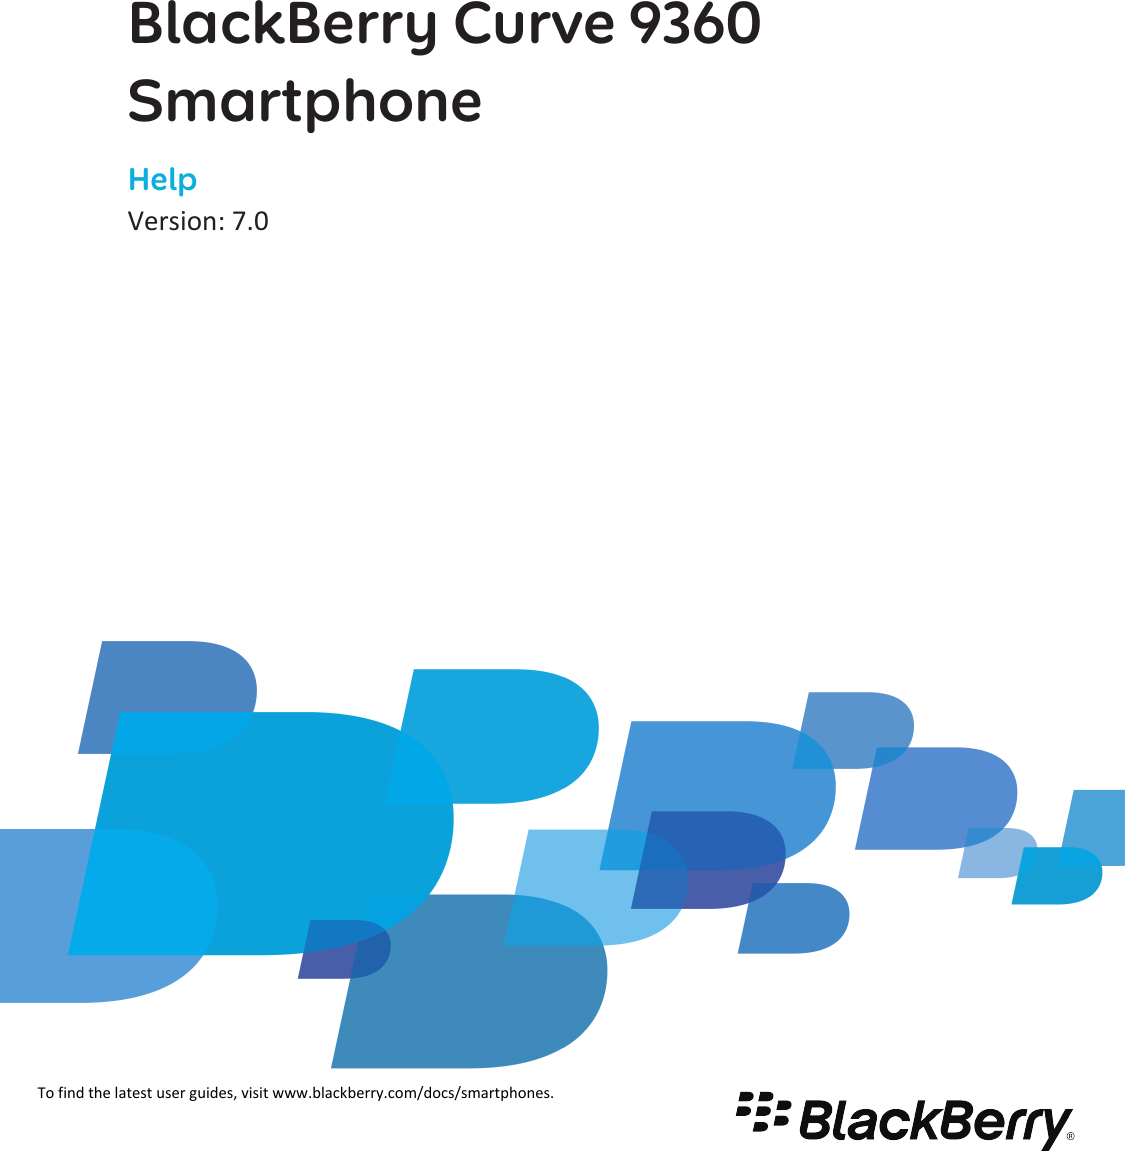 BlackBerry Curve 9360SmartphoneHelpVersion: 7.0To find the latest user guides, visit www.blackberry.com/docs/smartphones.